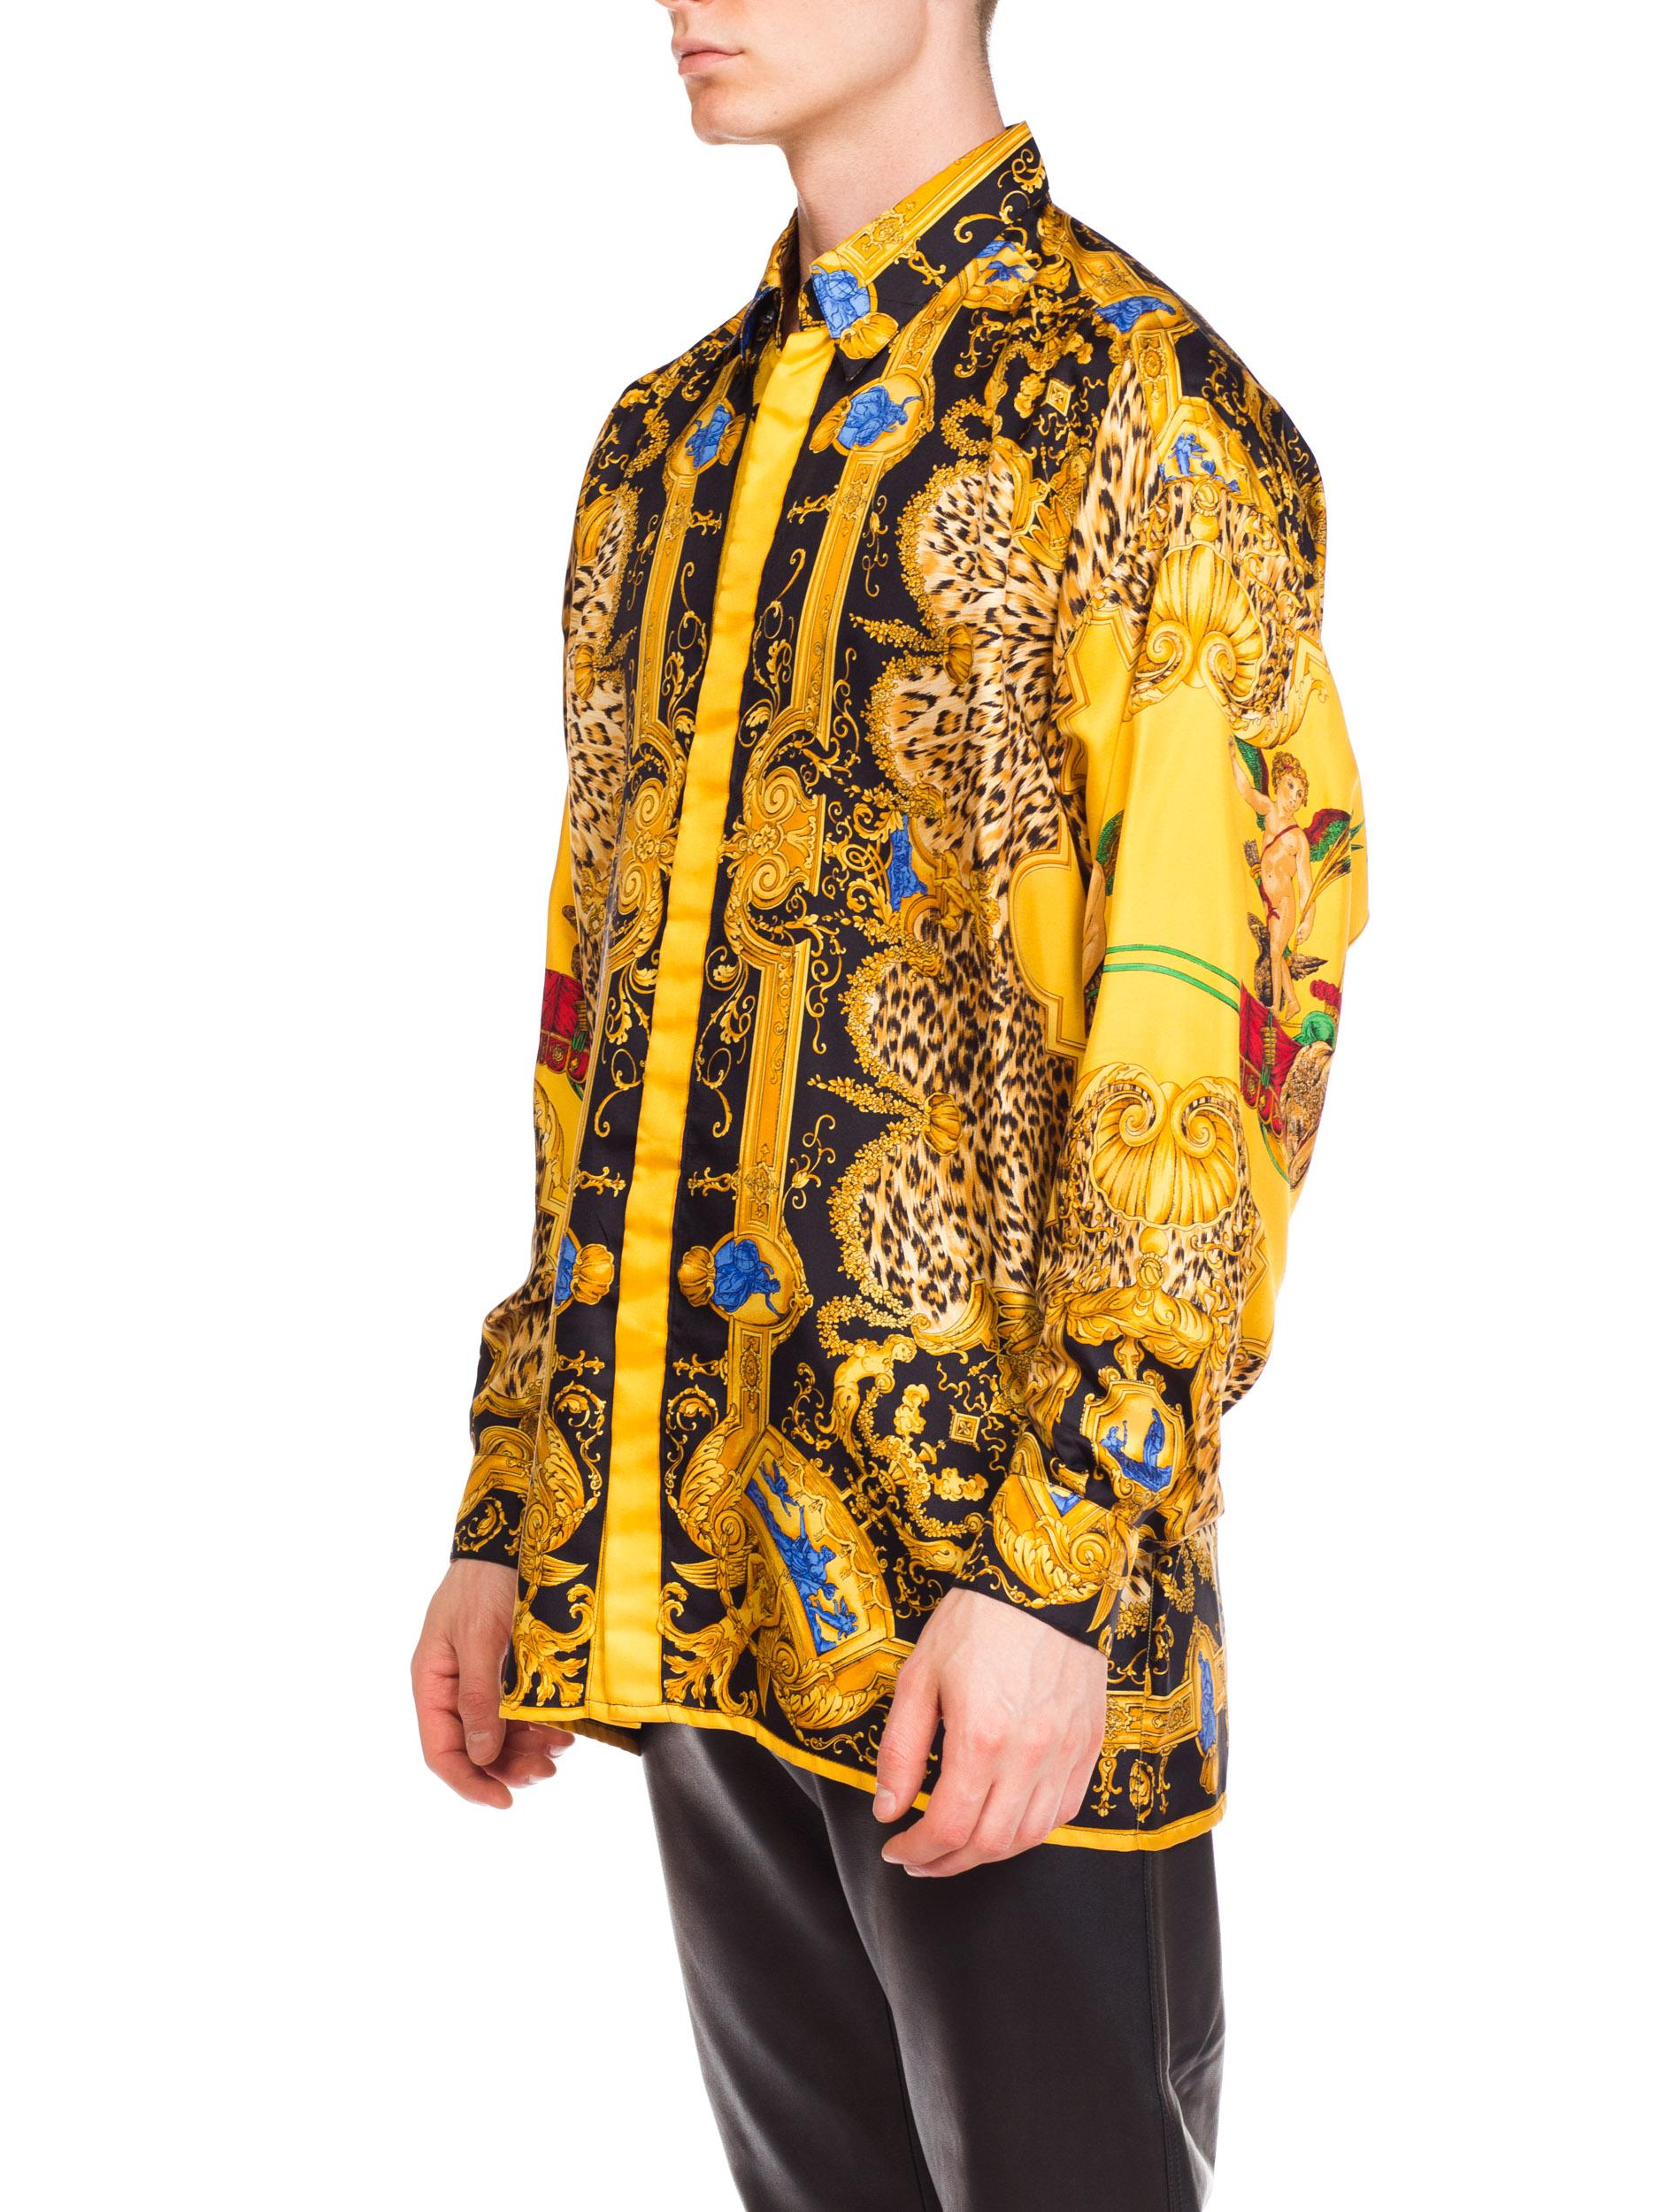 Men's 1990s Gianni Versace Leopard Baroque Printed Silk Shirt 